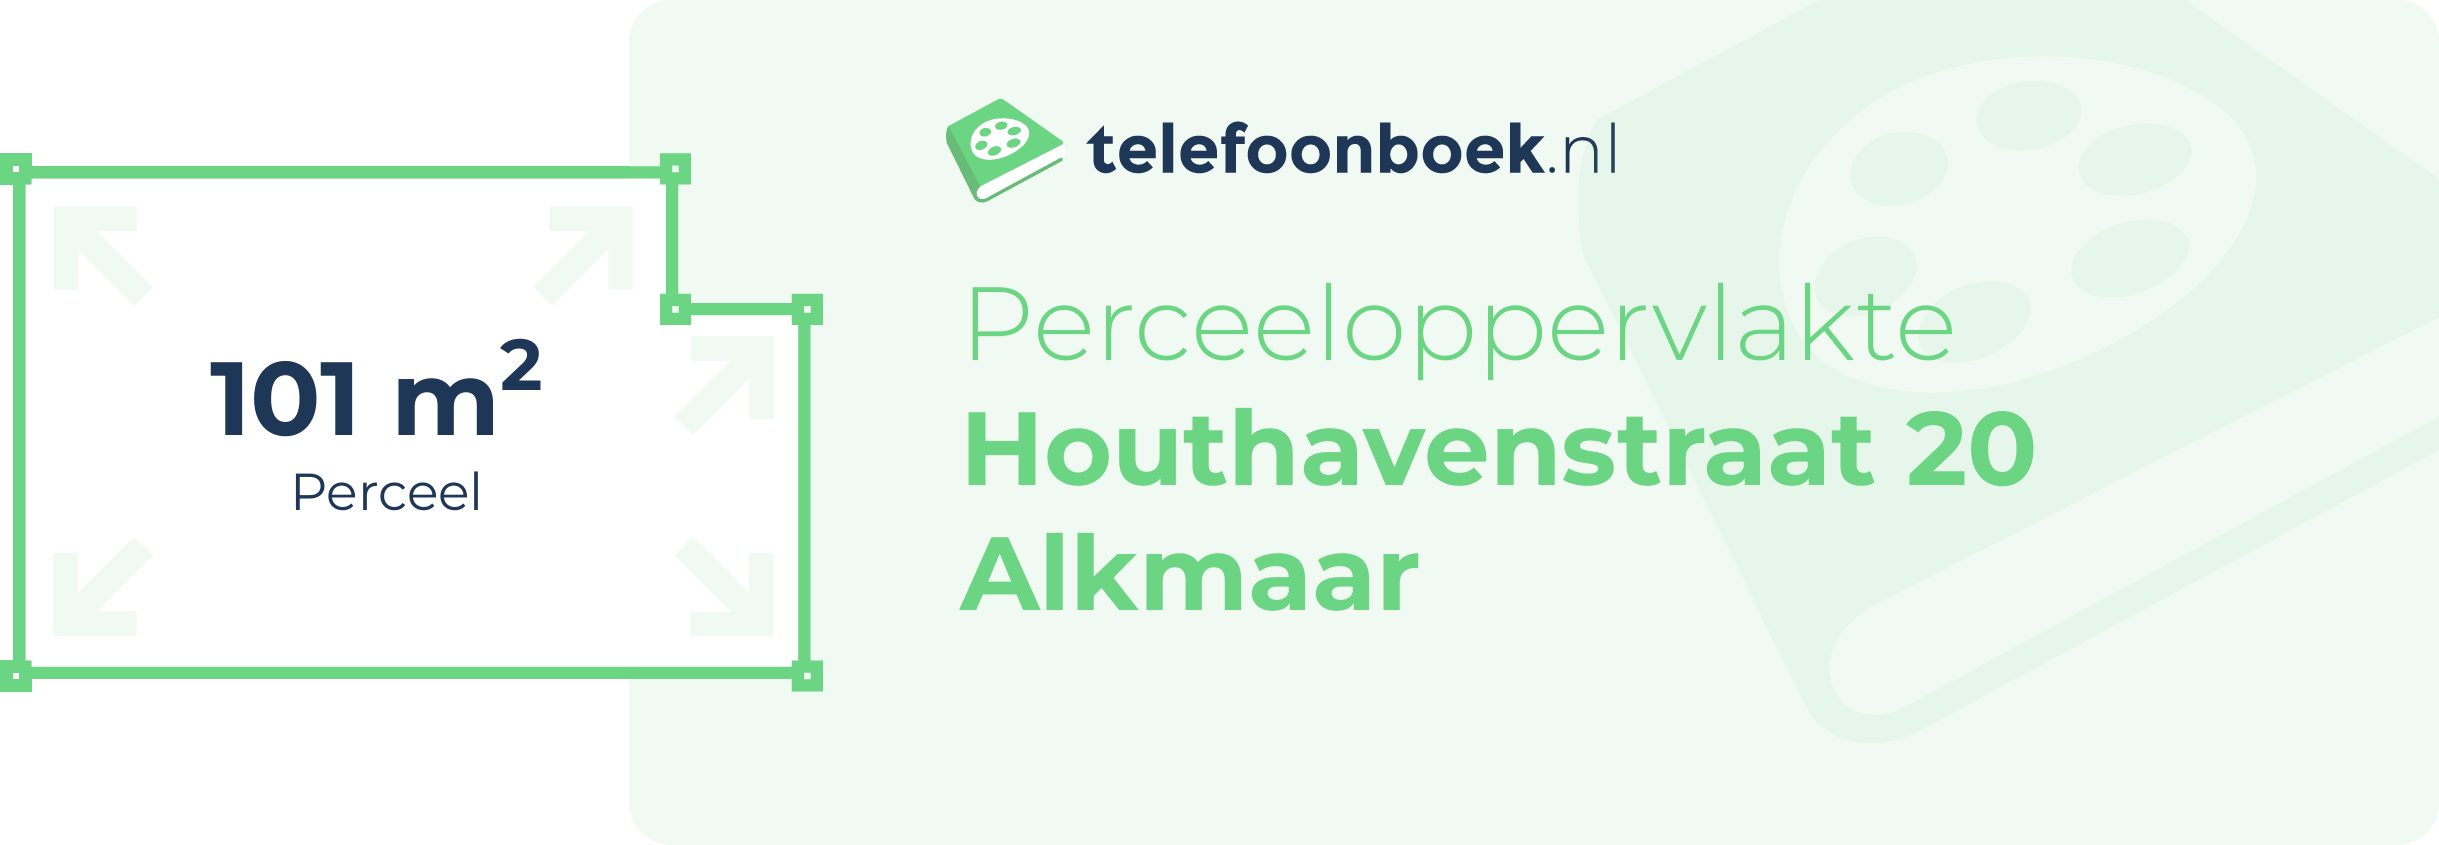 Perceeloppervlakte Houthavenstraat 20 Alkmaar